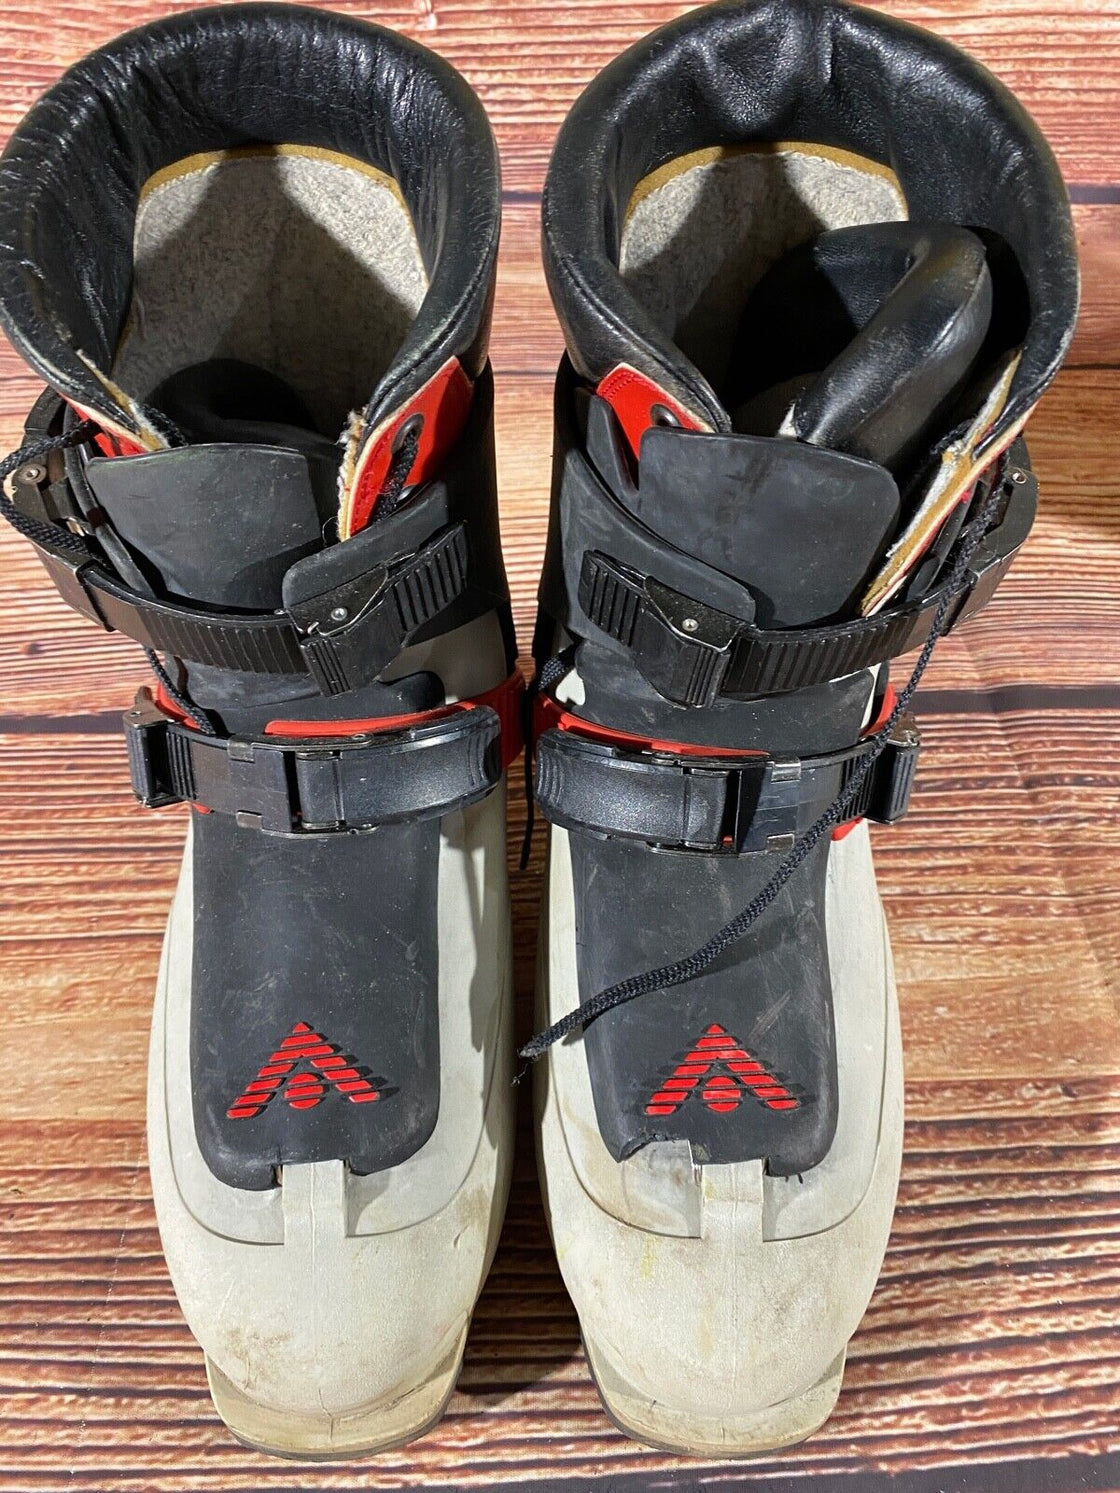 DACHSTEIN Alpine NTN Ski Boots Size Mondo 267 mm, US8.5, Outer Sole 310 mm